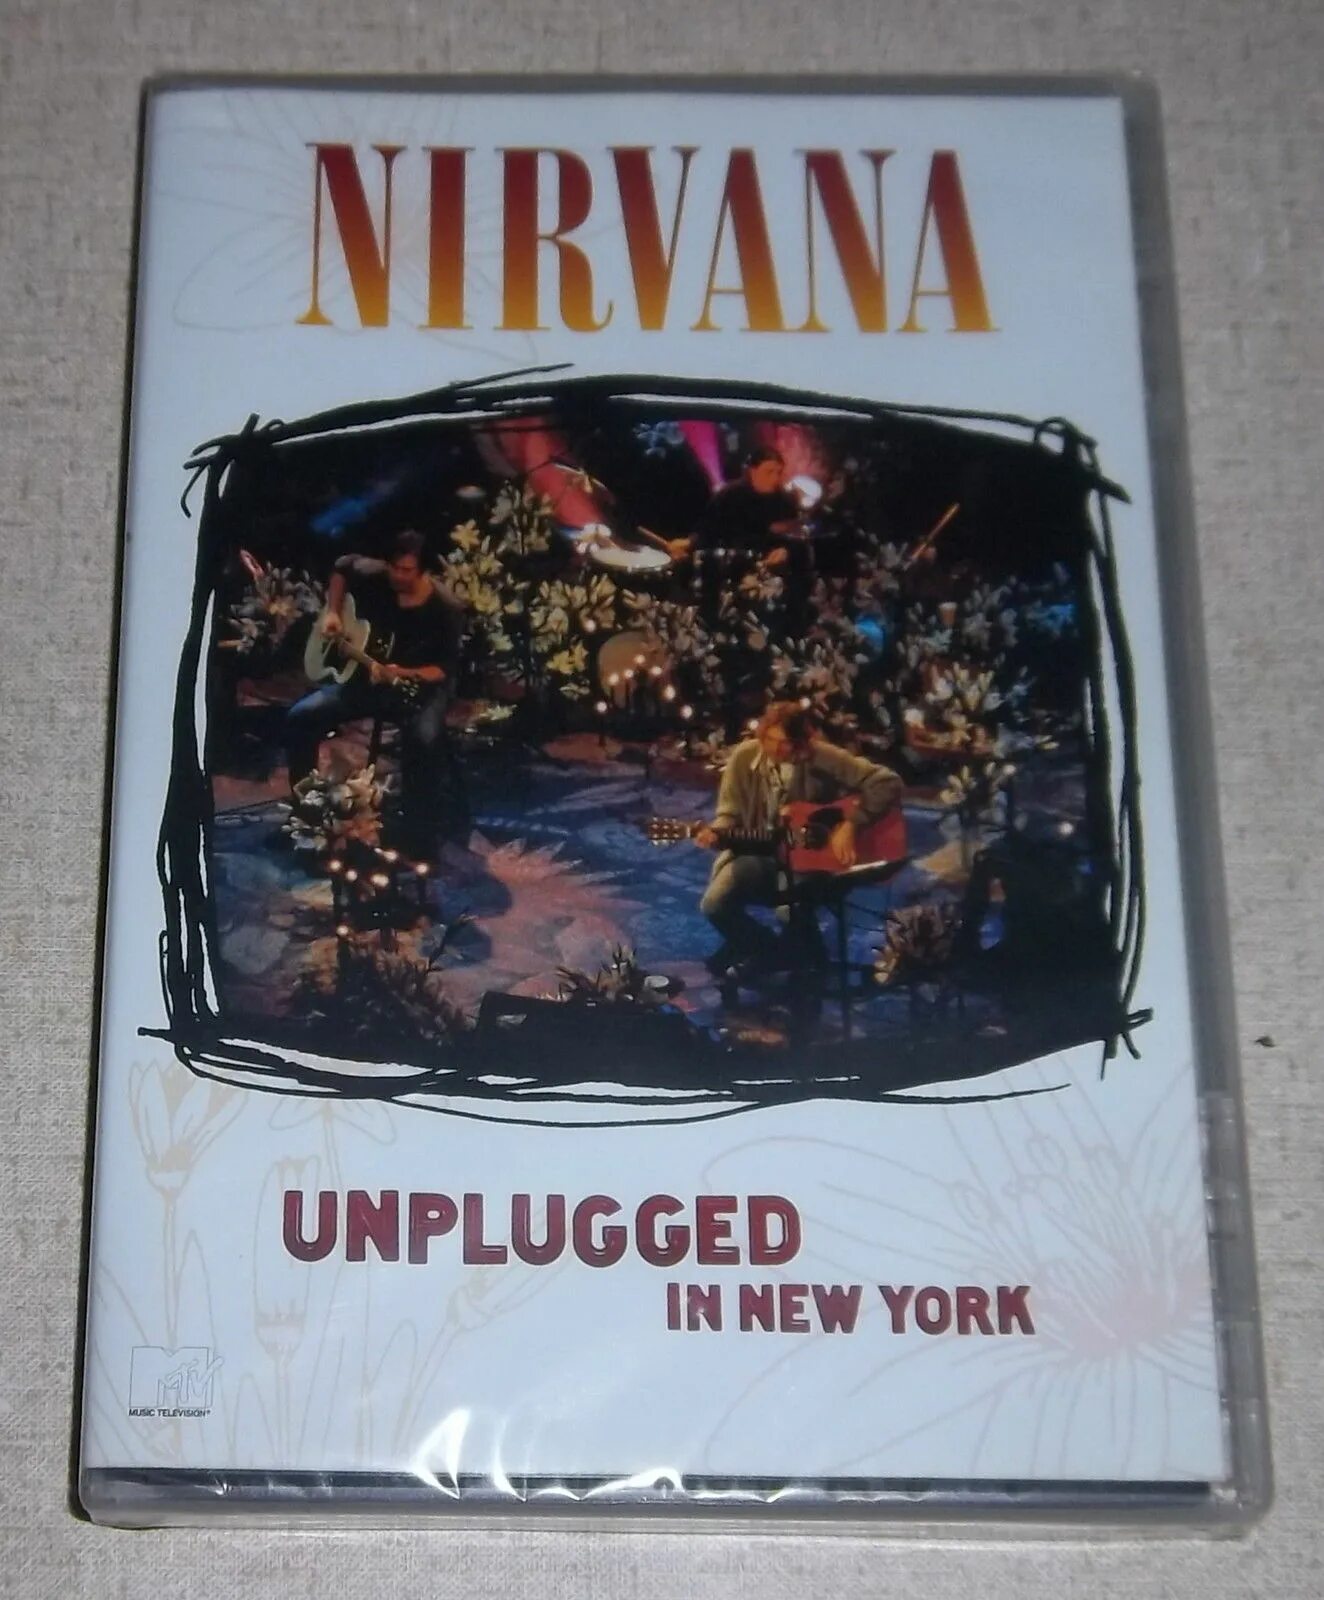 Nirvana unplugged in new. DVD Nirvana - Unplugged in New York. Nirvana MTV Unplugged in New York. Nirvana - Unplugged CD. Nirvana Unplugged poster.